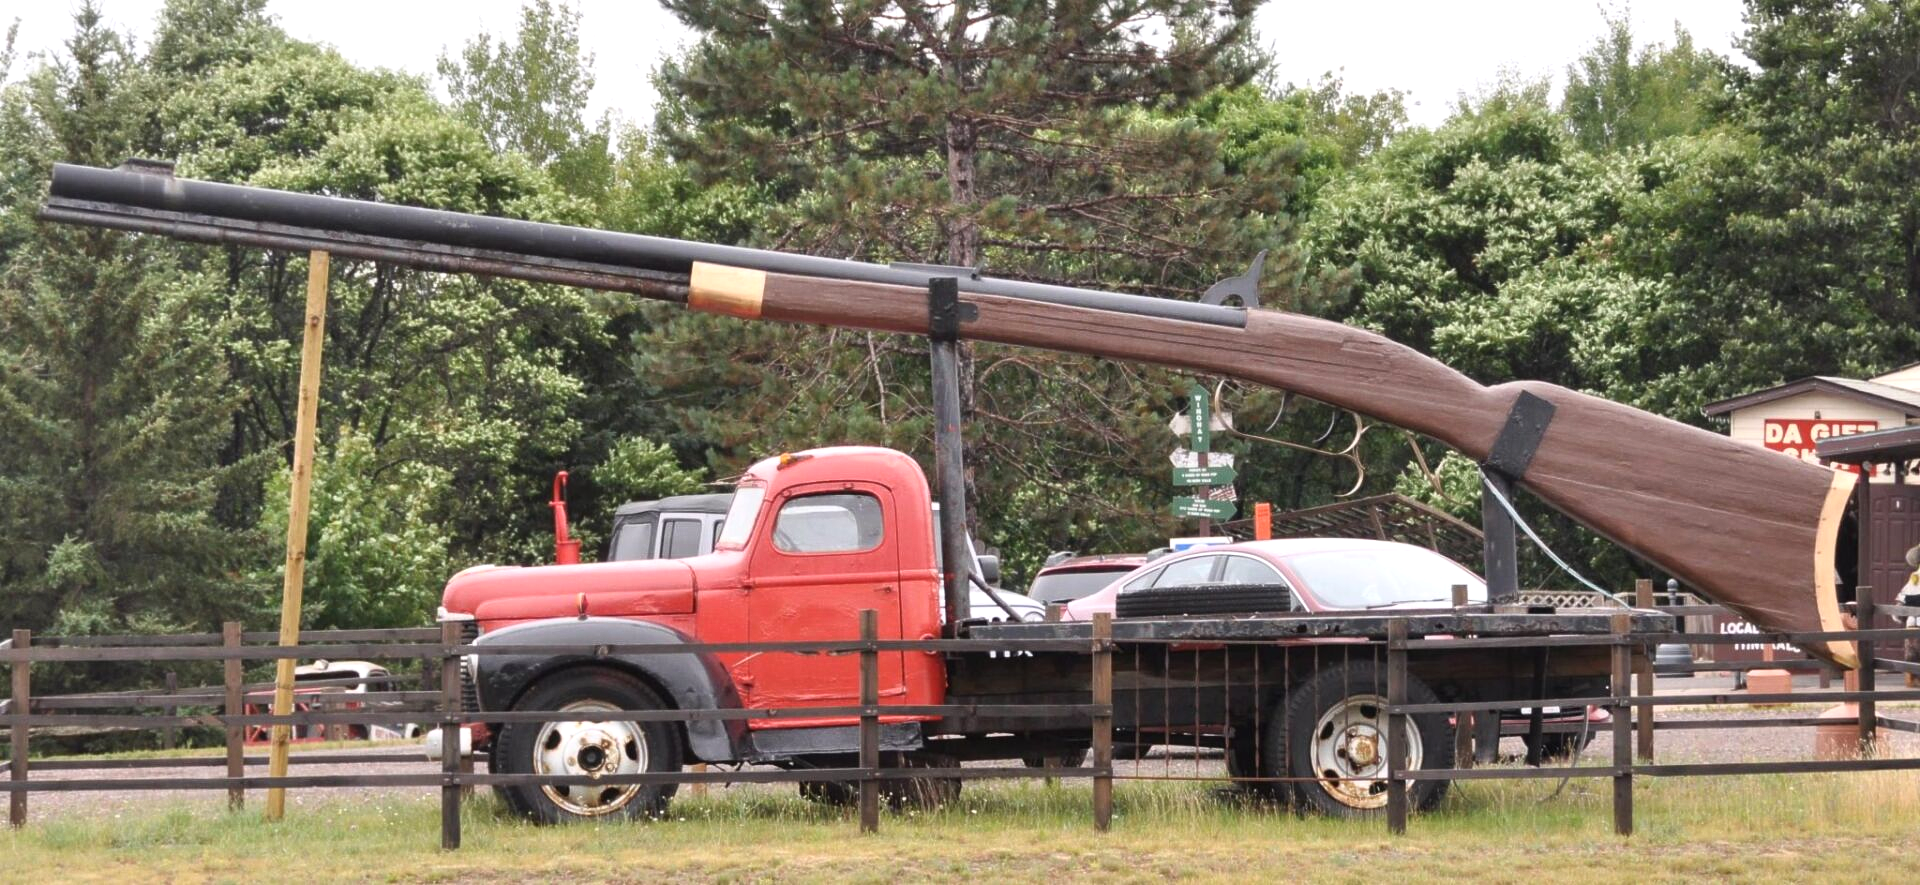 World's Largest Working Rifle: world record in Ishpeming, Michigan